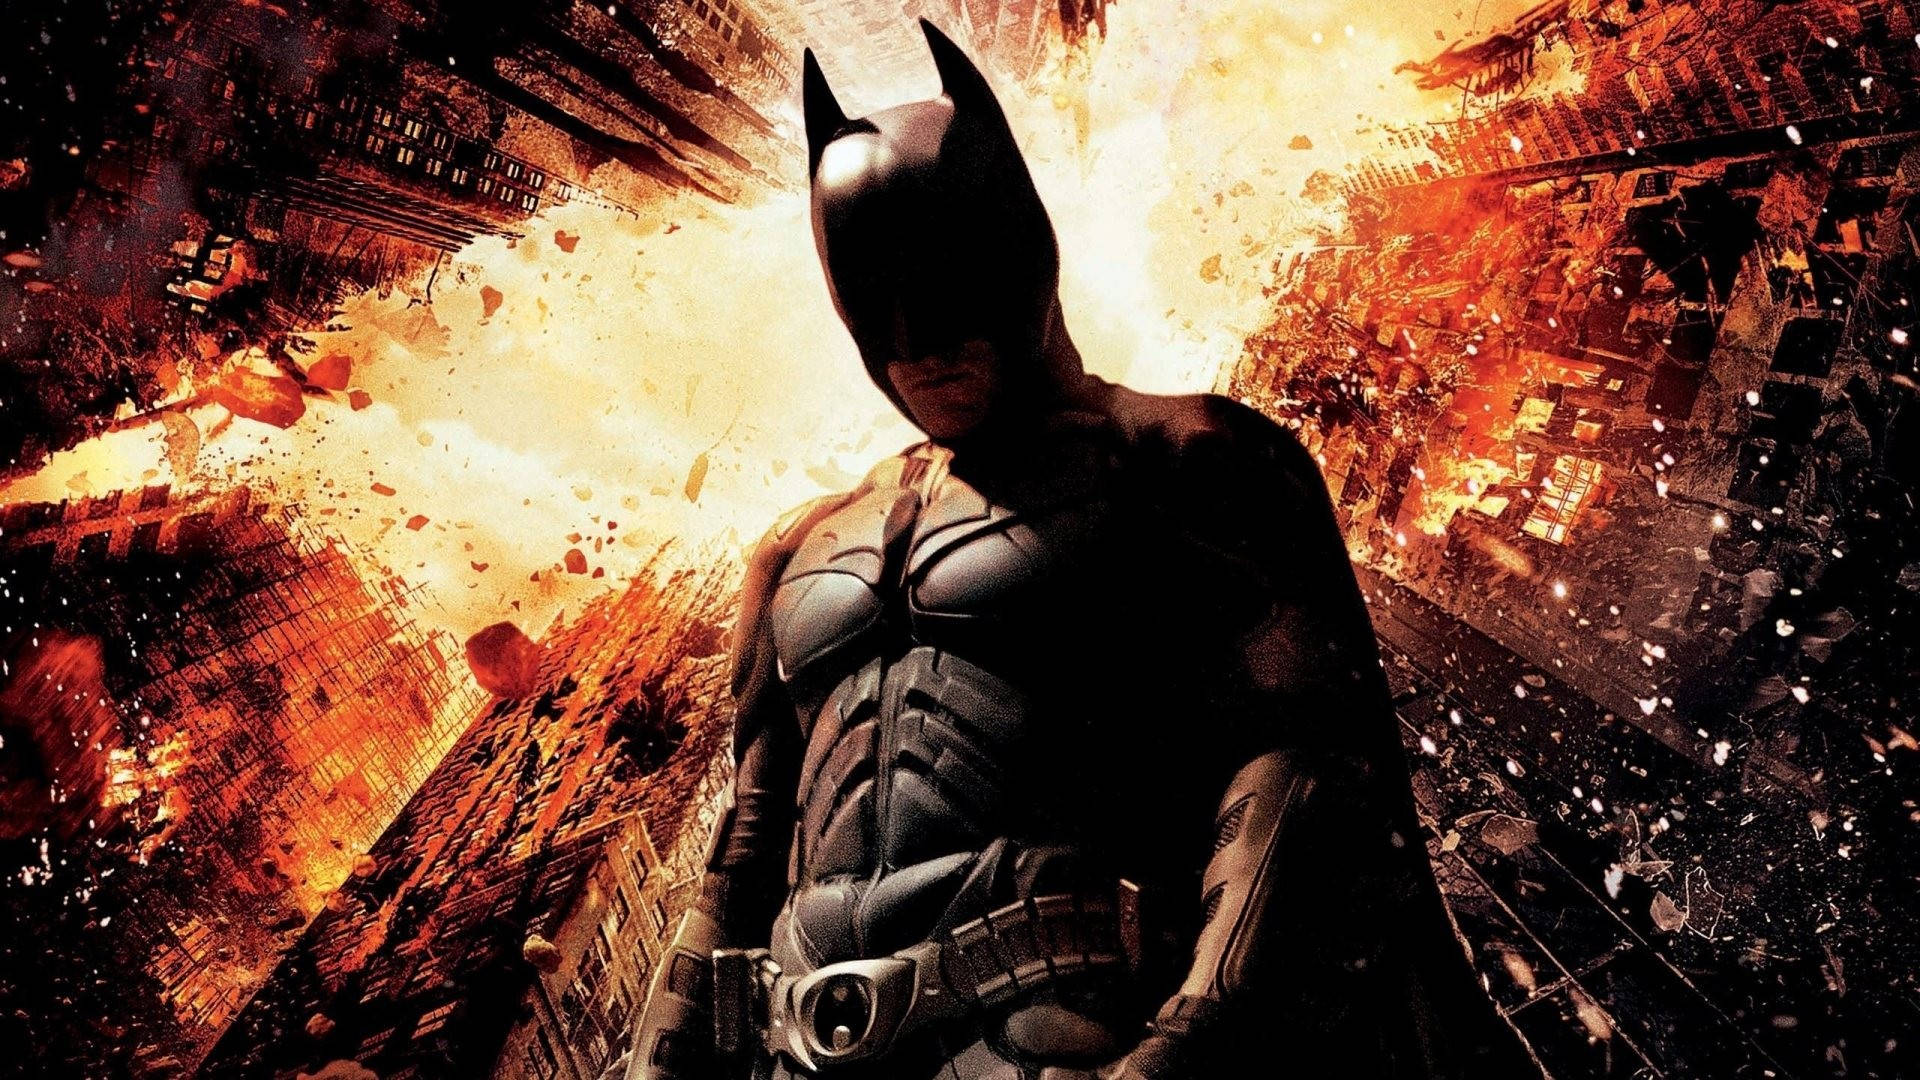 Hd Superhero The Dark Knight Wallpaper